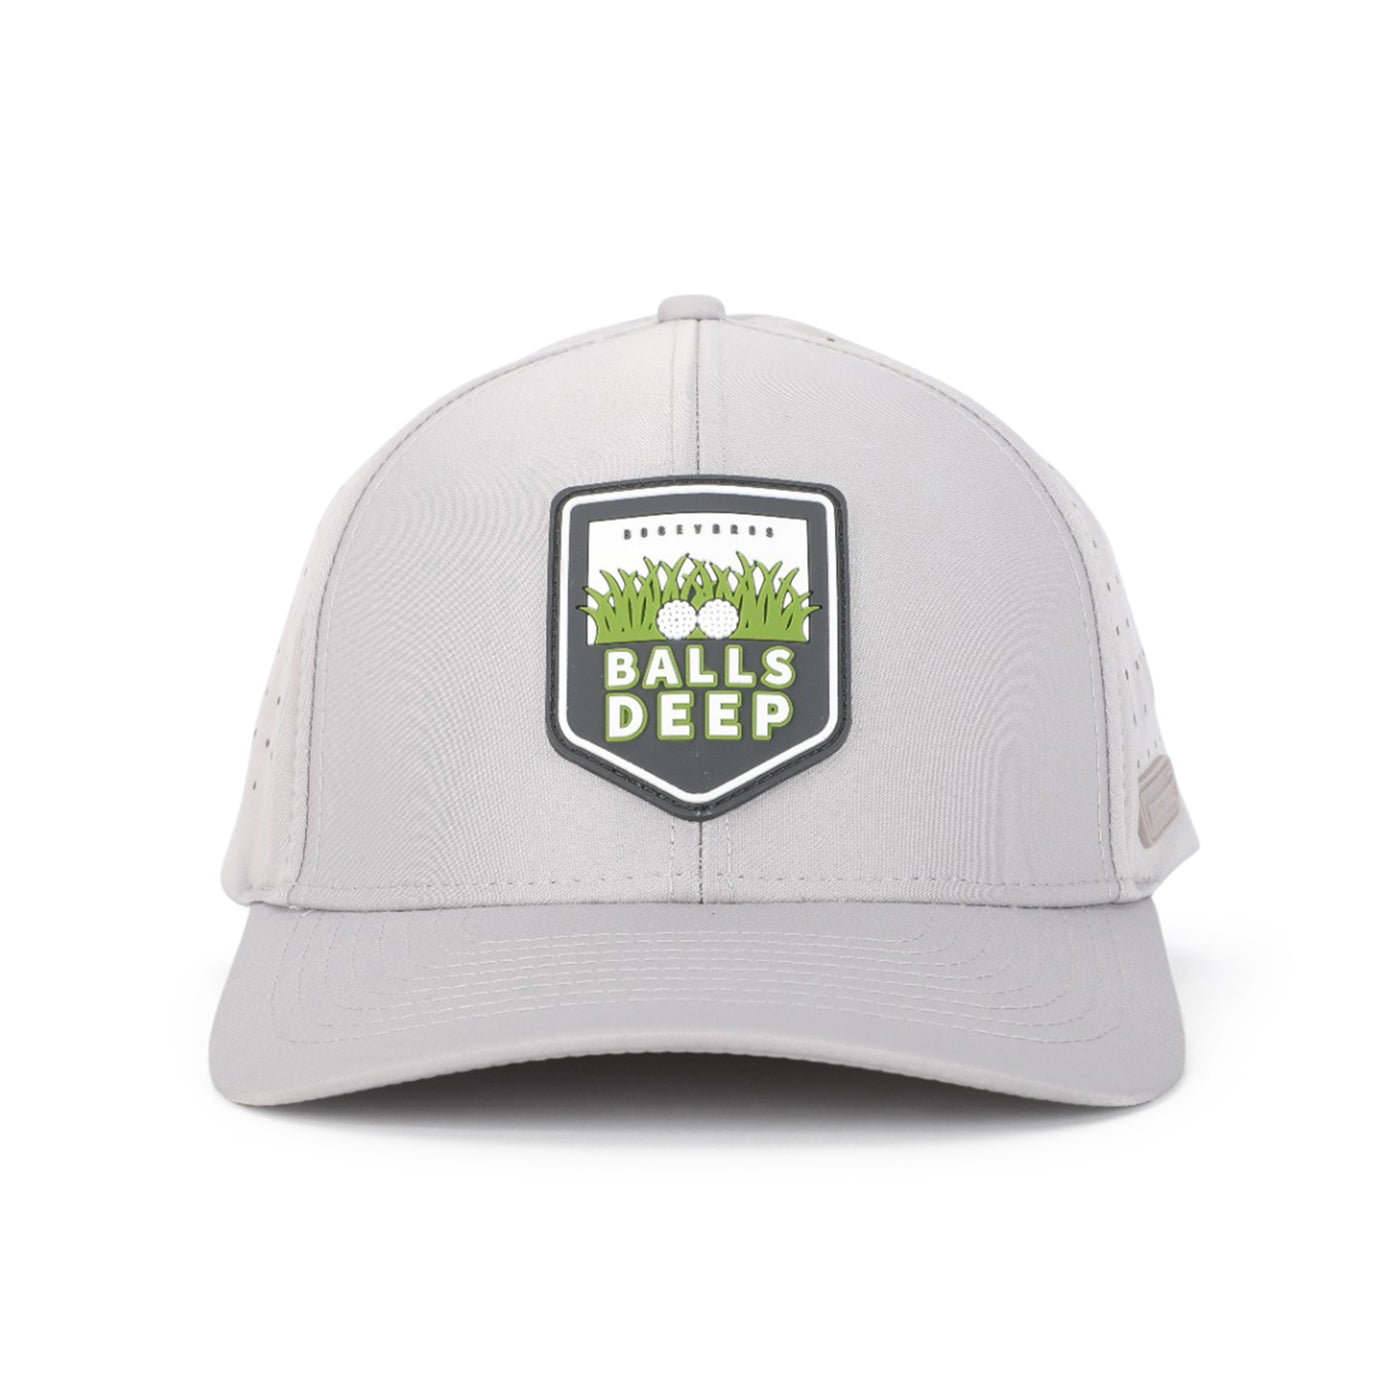 Balls Deep - Performance Golf Hat - Stretch Fit